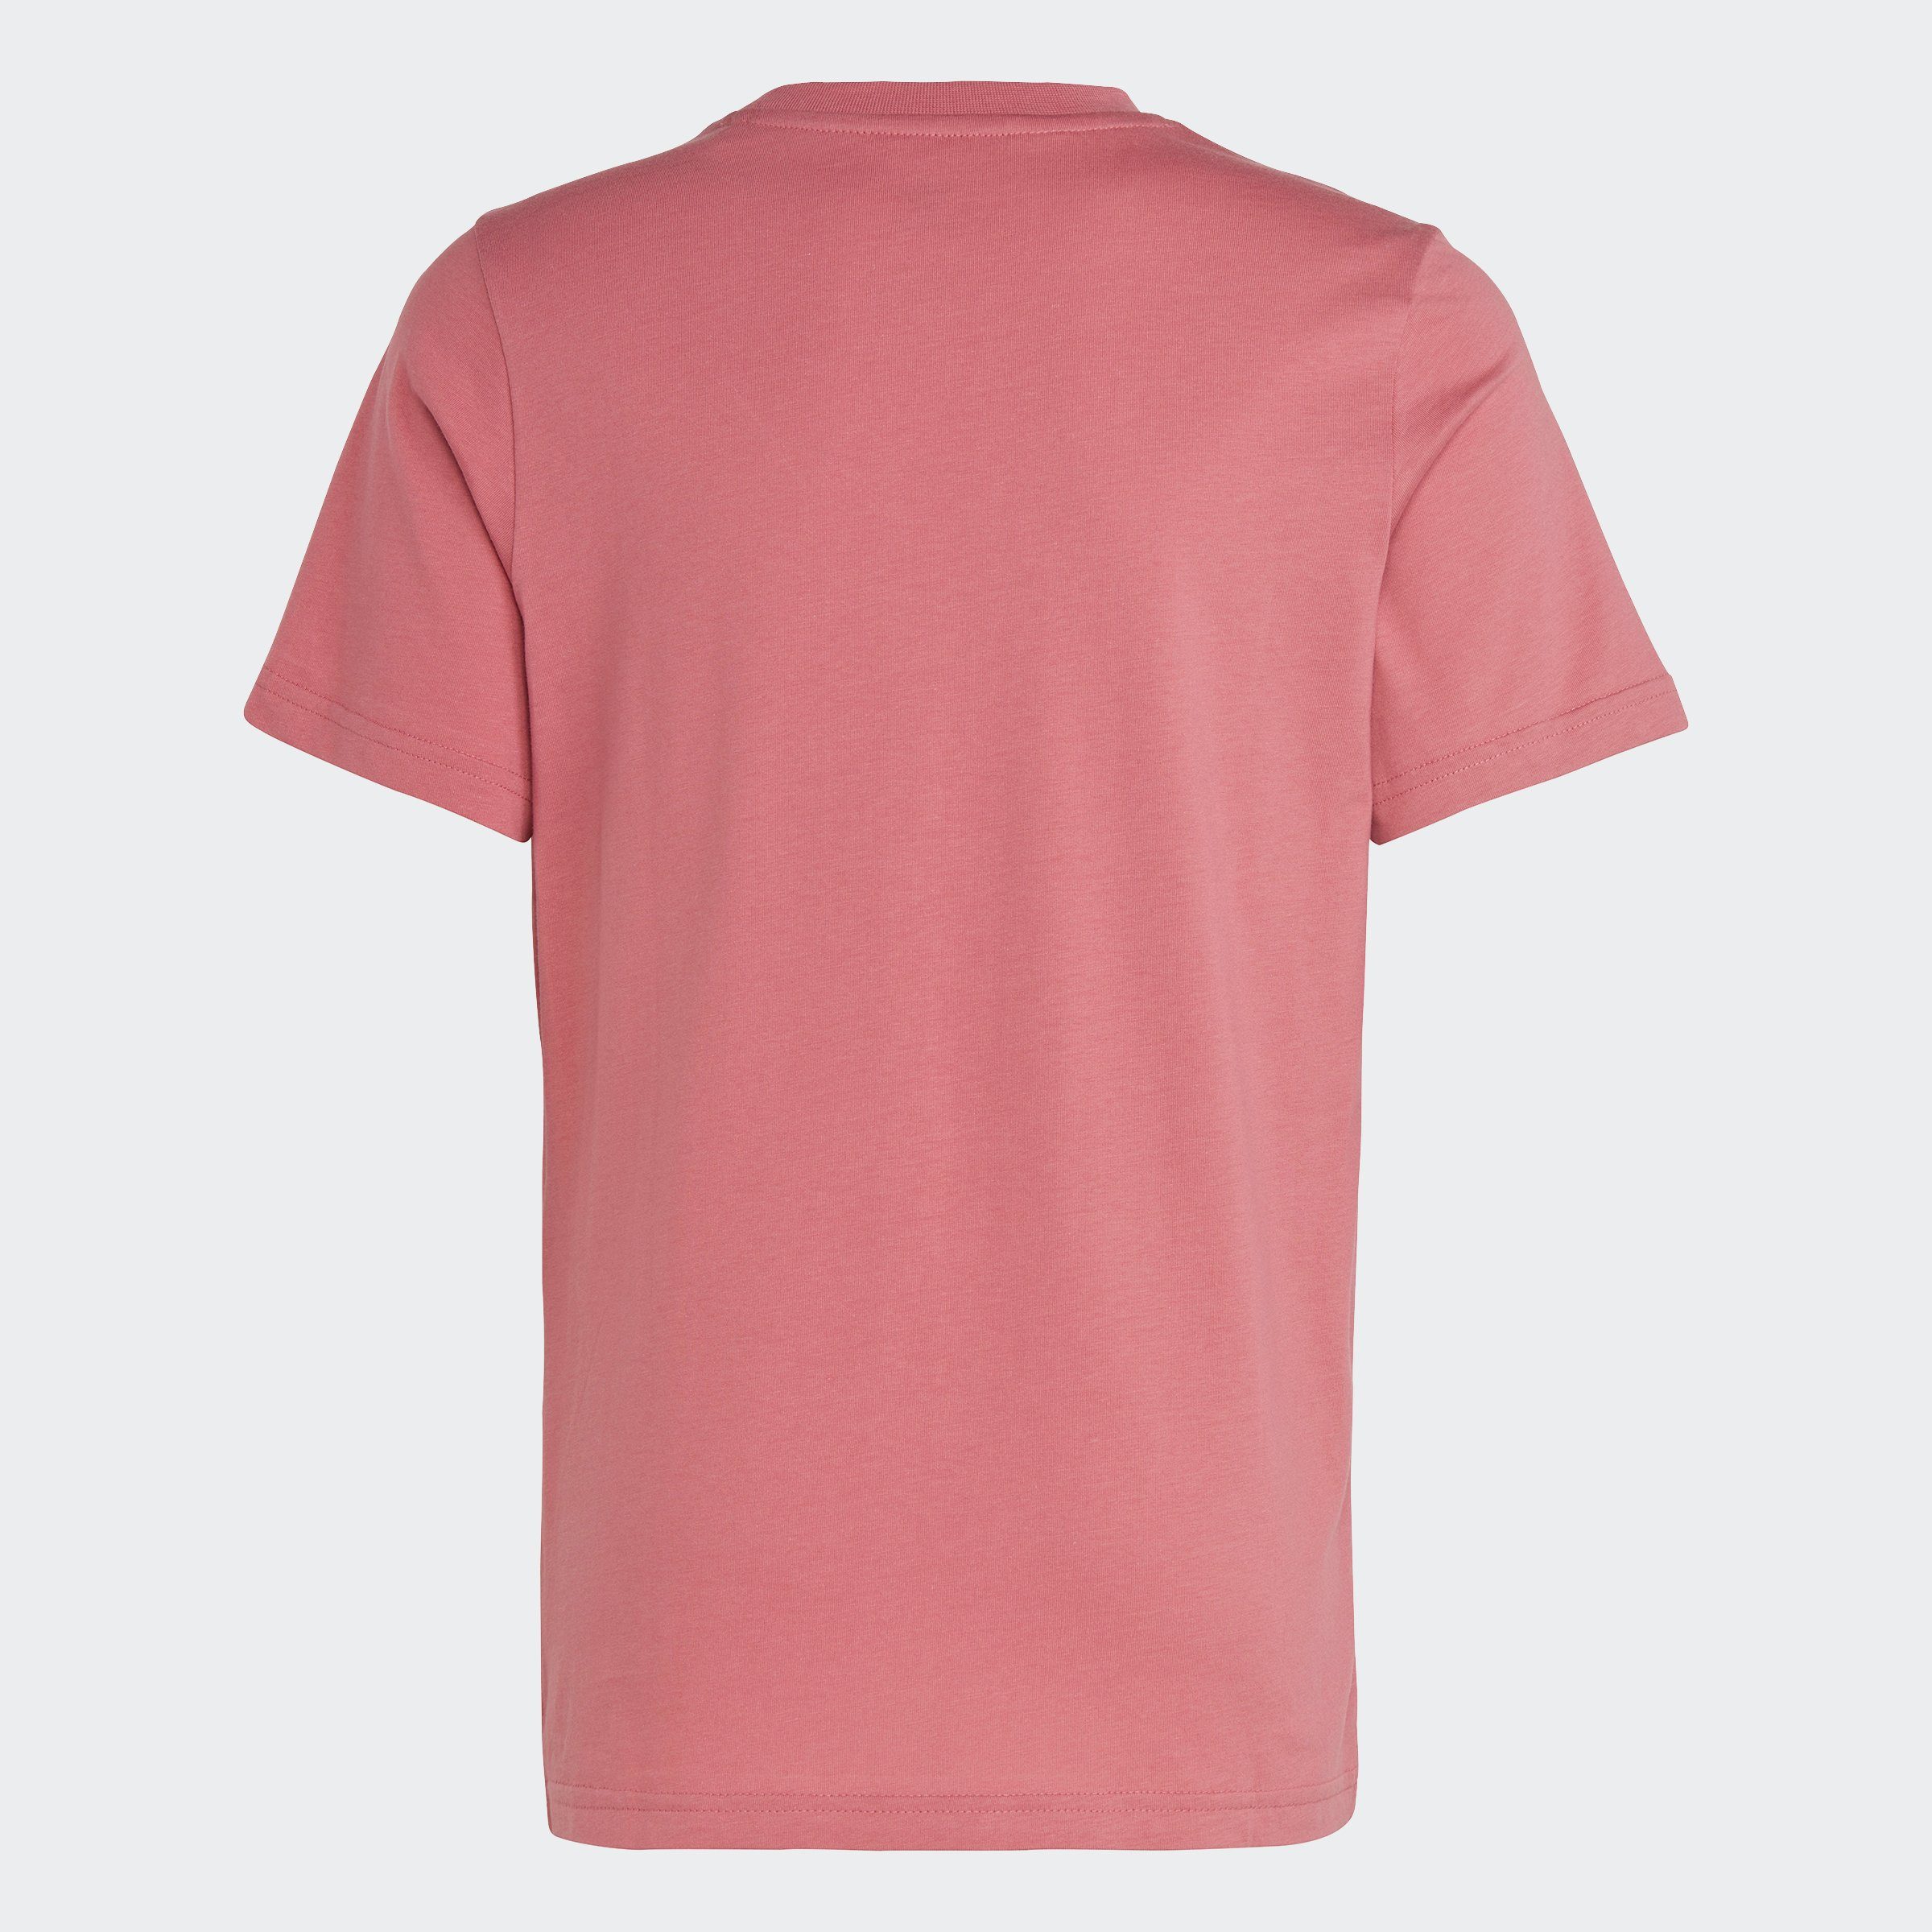 adidas Pink Originals Strata T-Shirt TEE